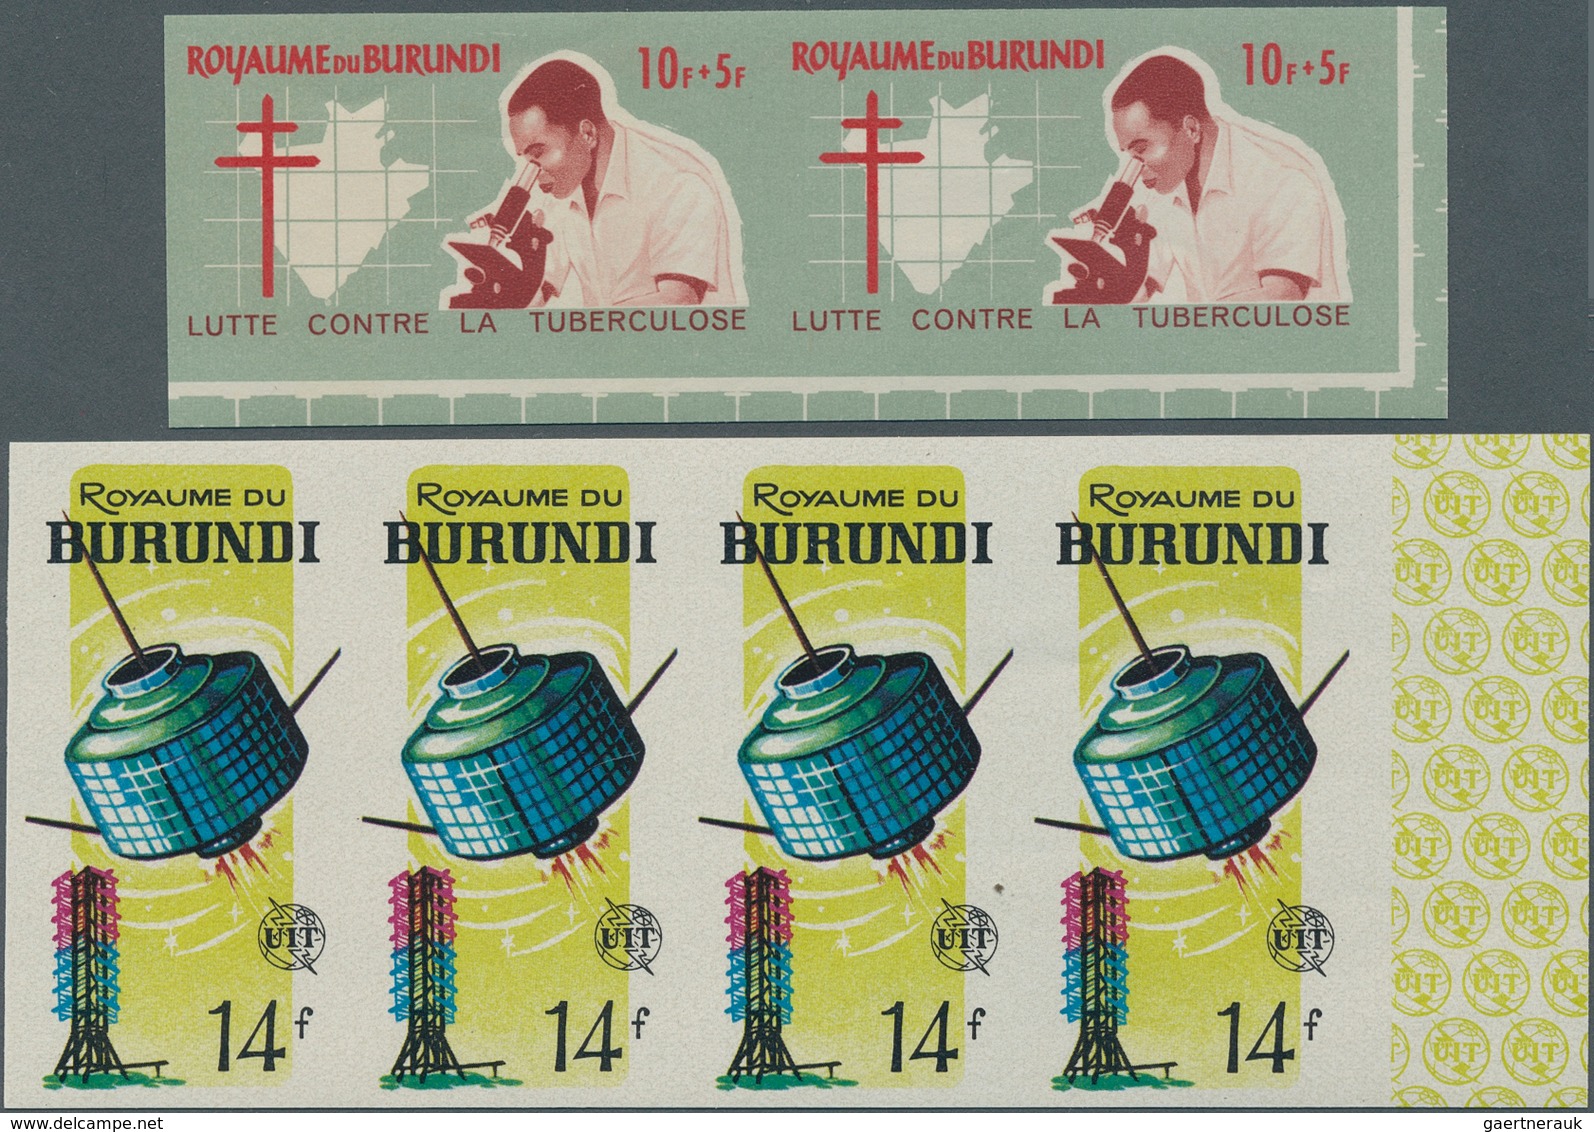 Burundi: 1964/1965, Lot Of 5376 IMPERFORATE Stamps MNH, Showing Various Topics Like Dance, Medicine, - Sammlungen